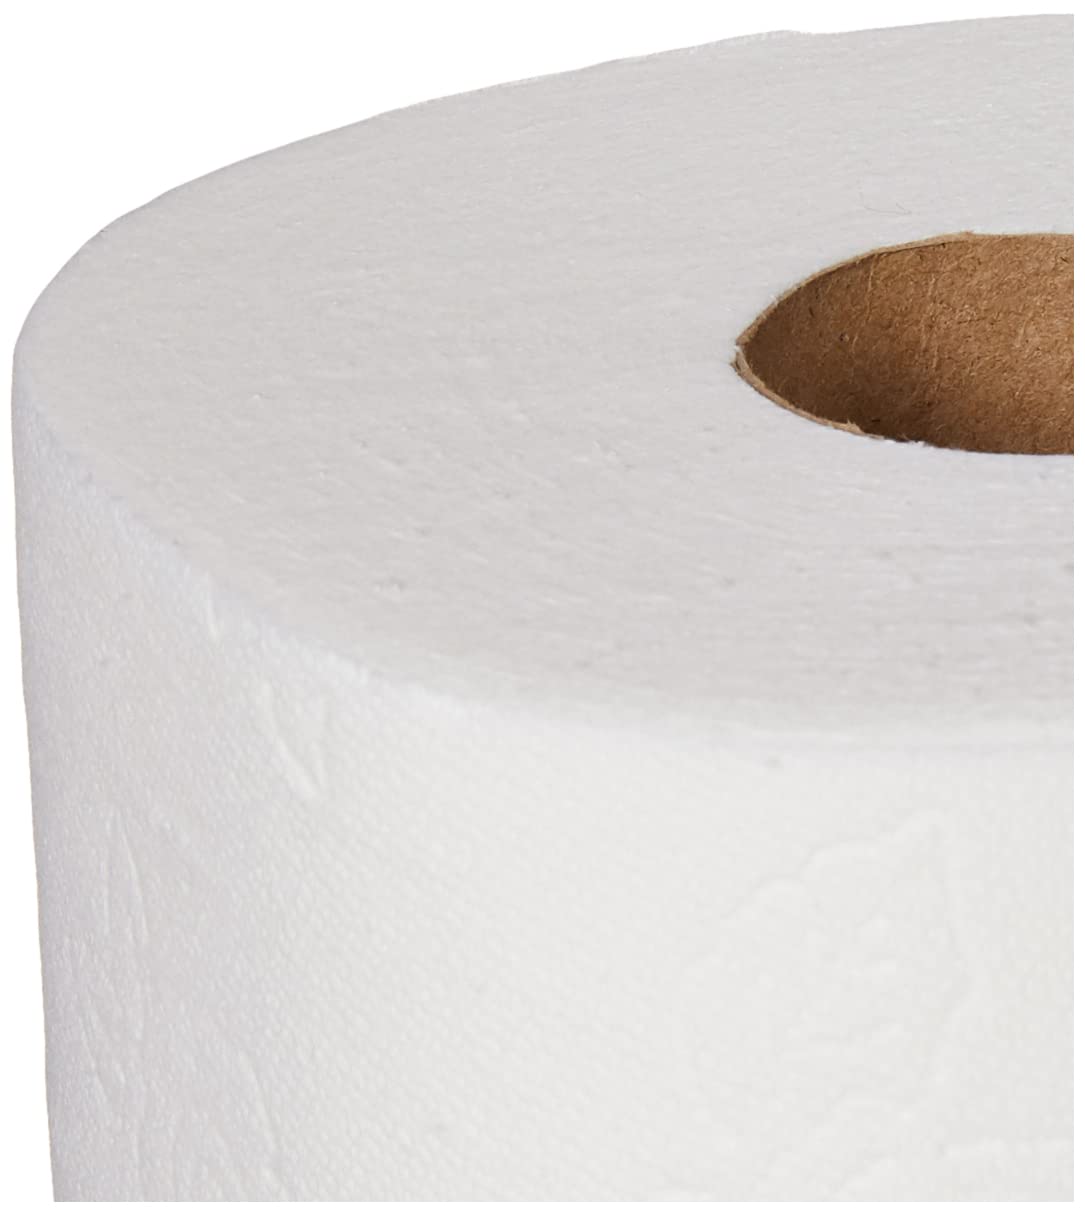 Amazon Brand - Presto! 313 2-Ply Sheet Mega Roll Toilet Paper, Ultra-Soft, 12 Rolls (2 Packs of 6), Equivalent to 60 Regular Rolls, White